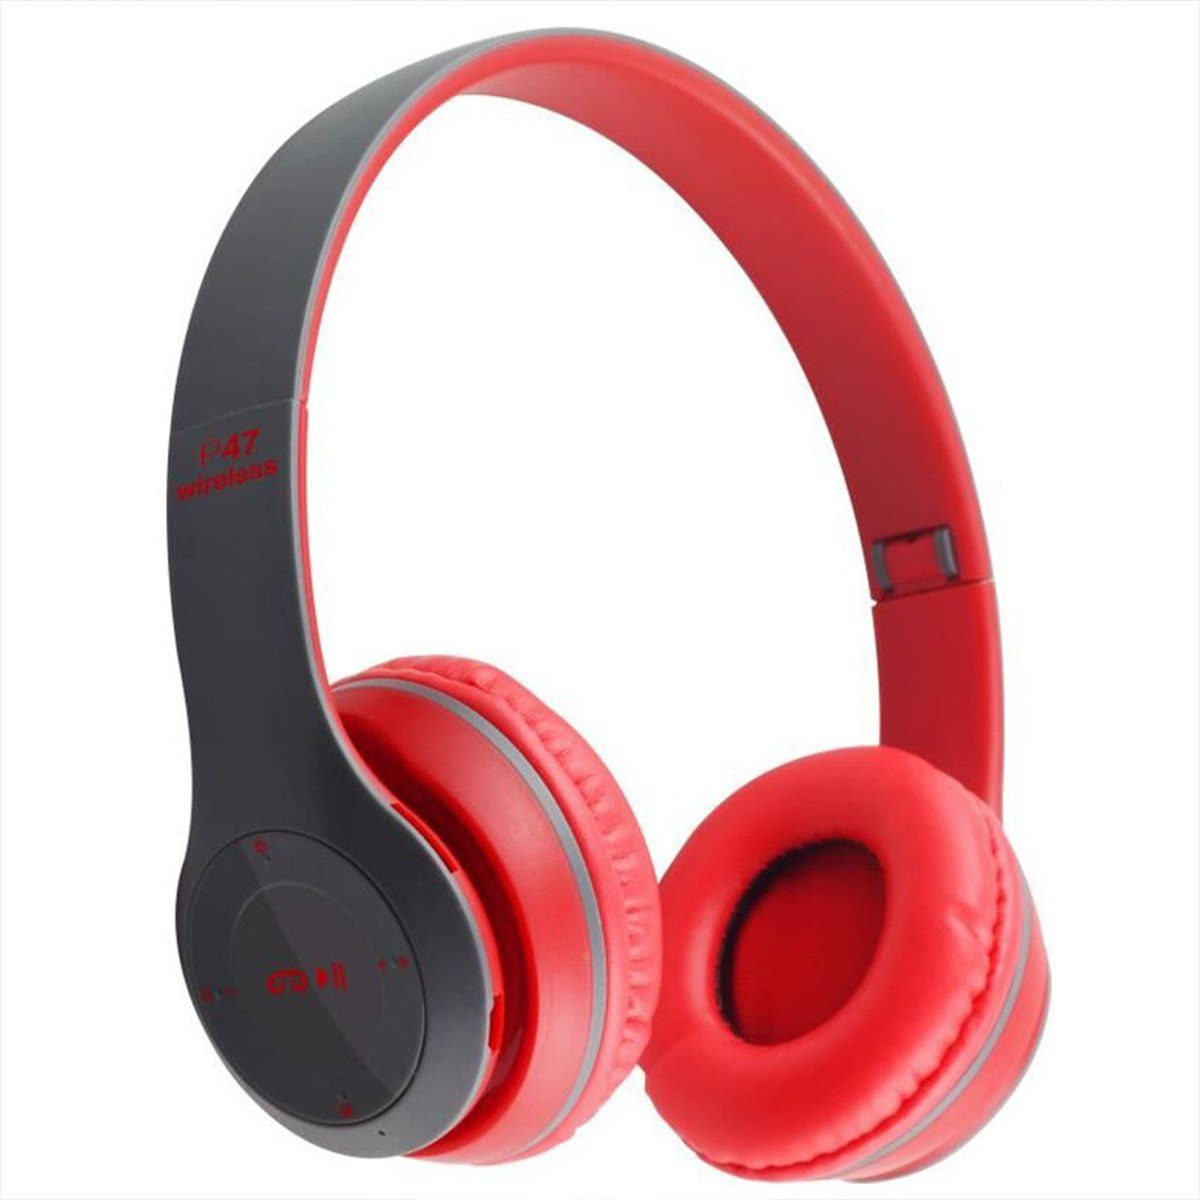 XDeer Bluetooth Over-Ear-Kopfhörer Wireless Faltbare Headset Over-Ear-Kopfhörer (Stereo Kopfhörer mit Micro USB Kabel, 3,5mm Köpfhorerkabel) Rot